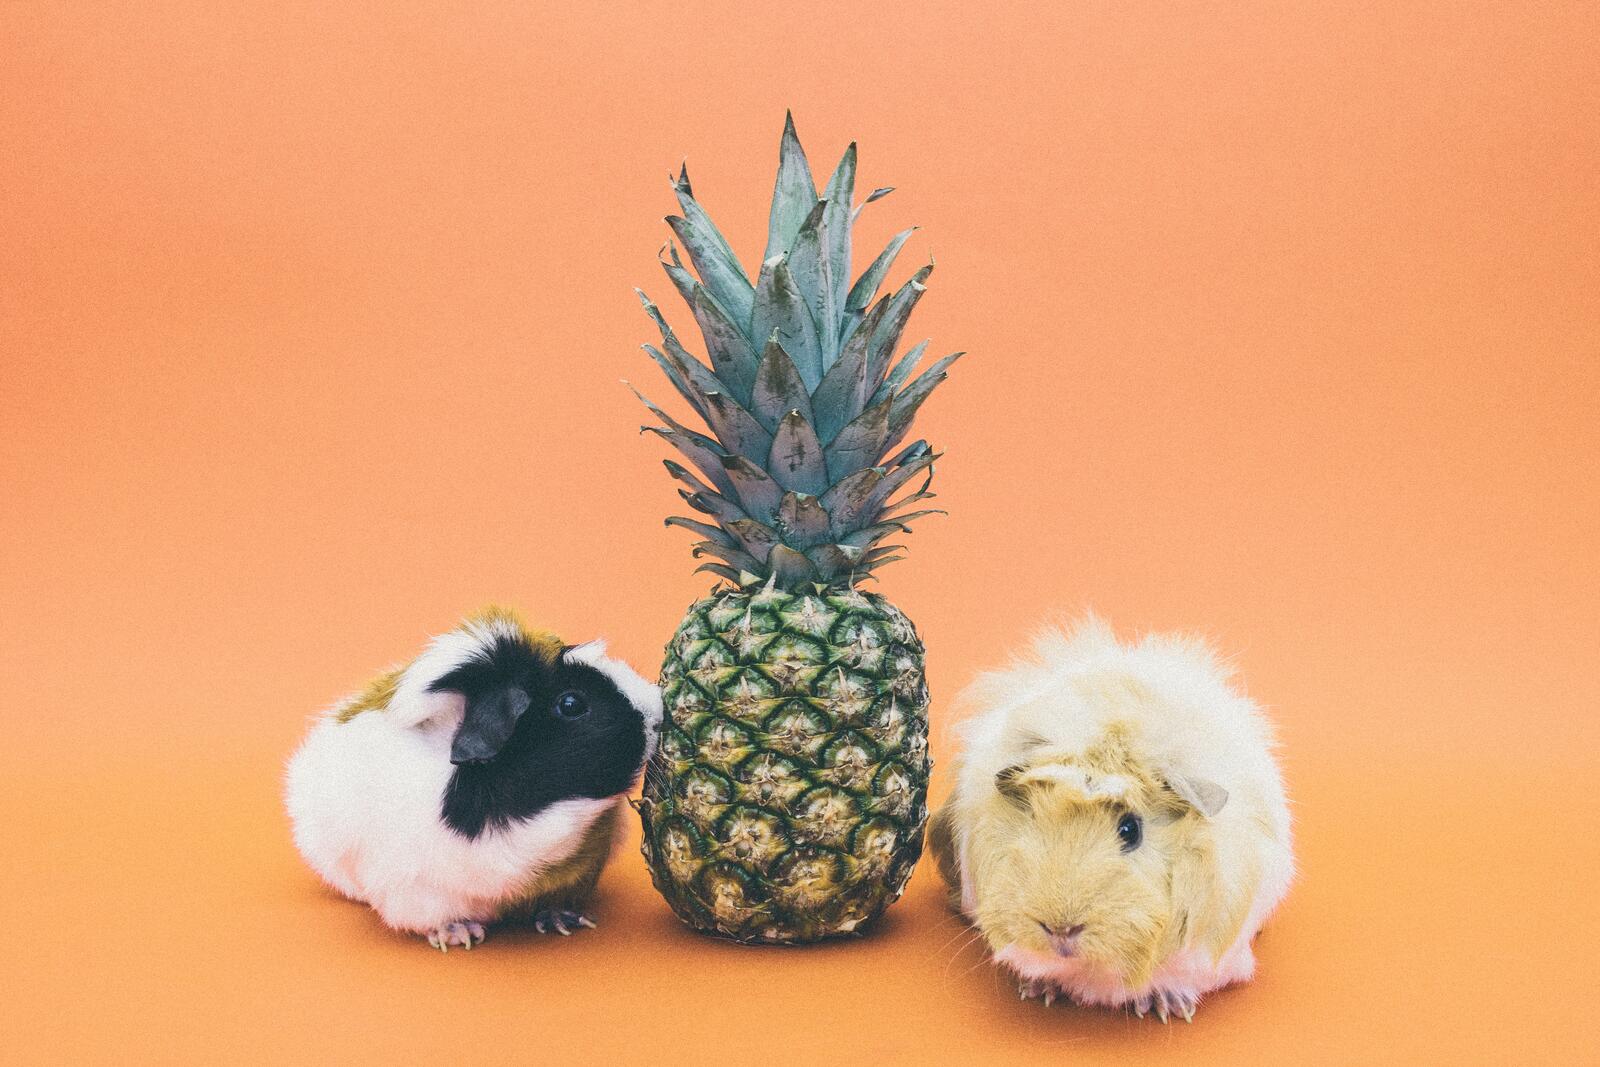 Free photo Guinea pigs near a pineapple on an orange background